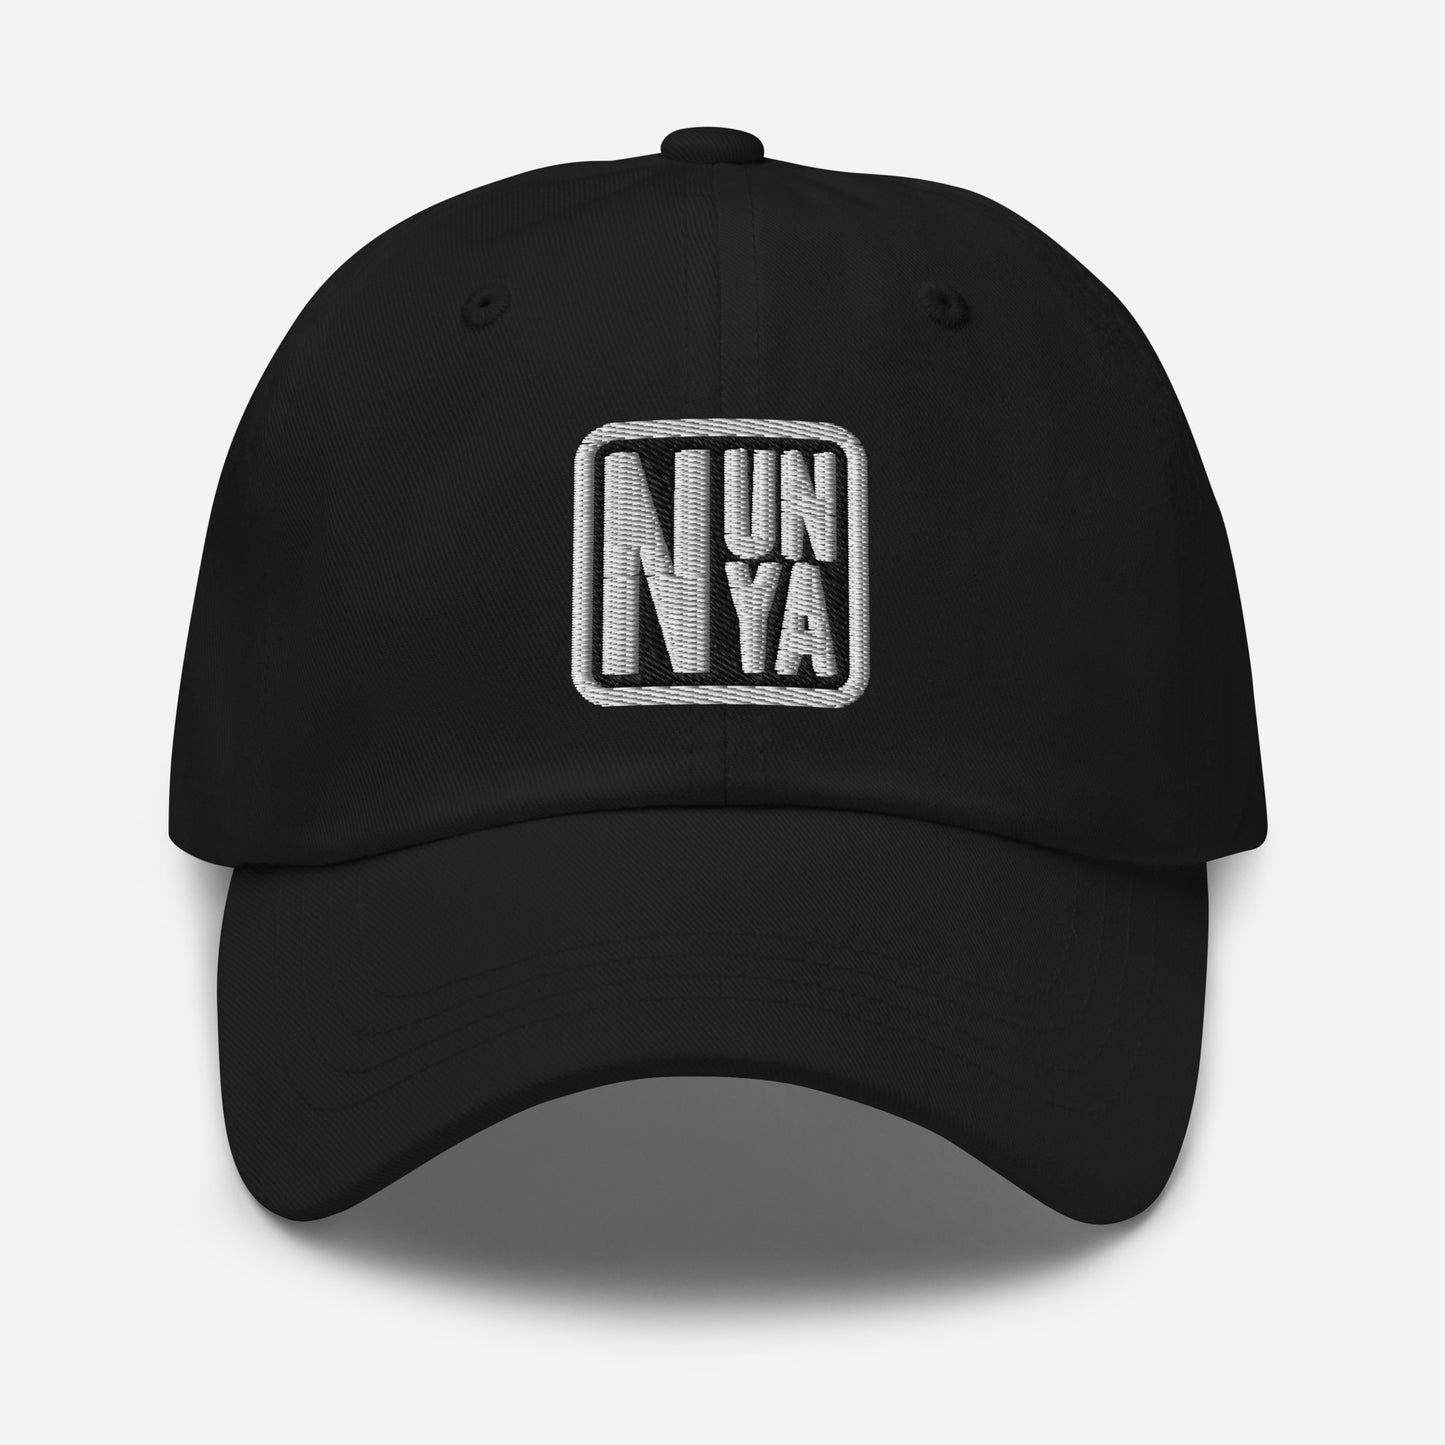 Nunya (W) Dad hat